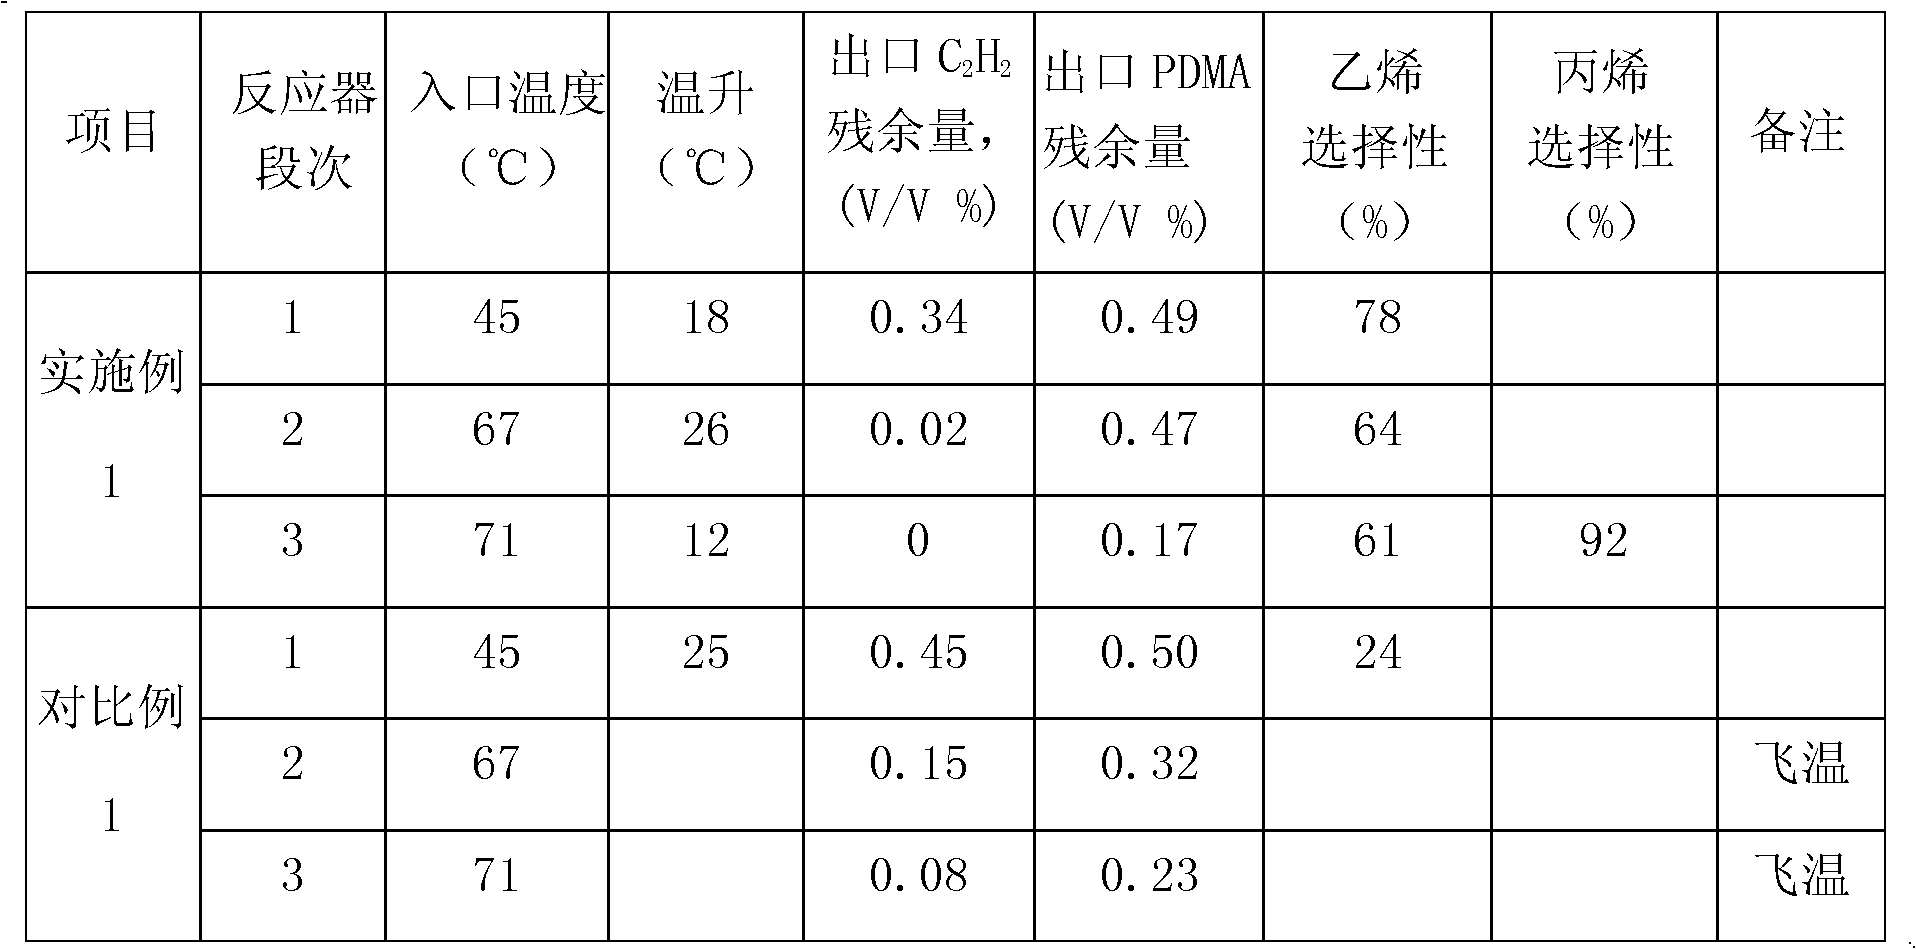 Selective hydrogenation method for C2 fraction